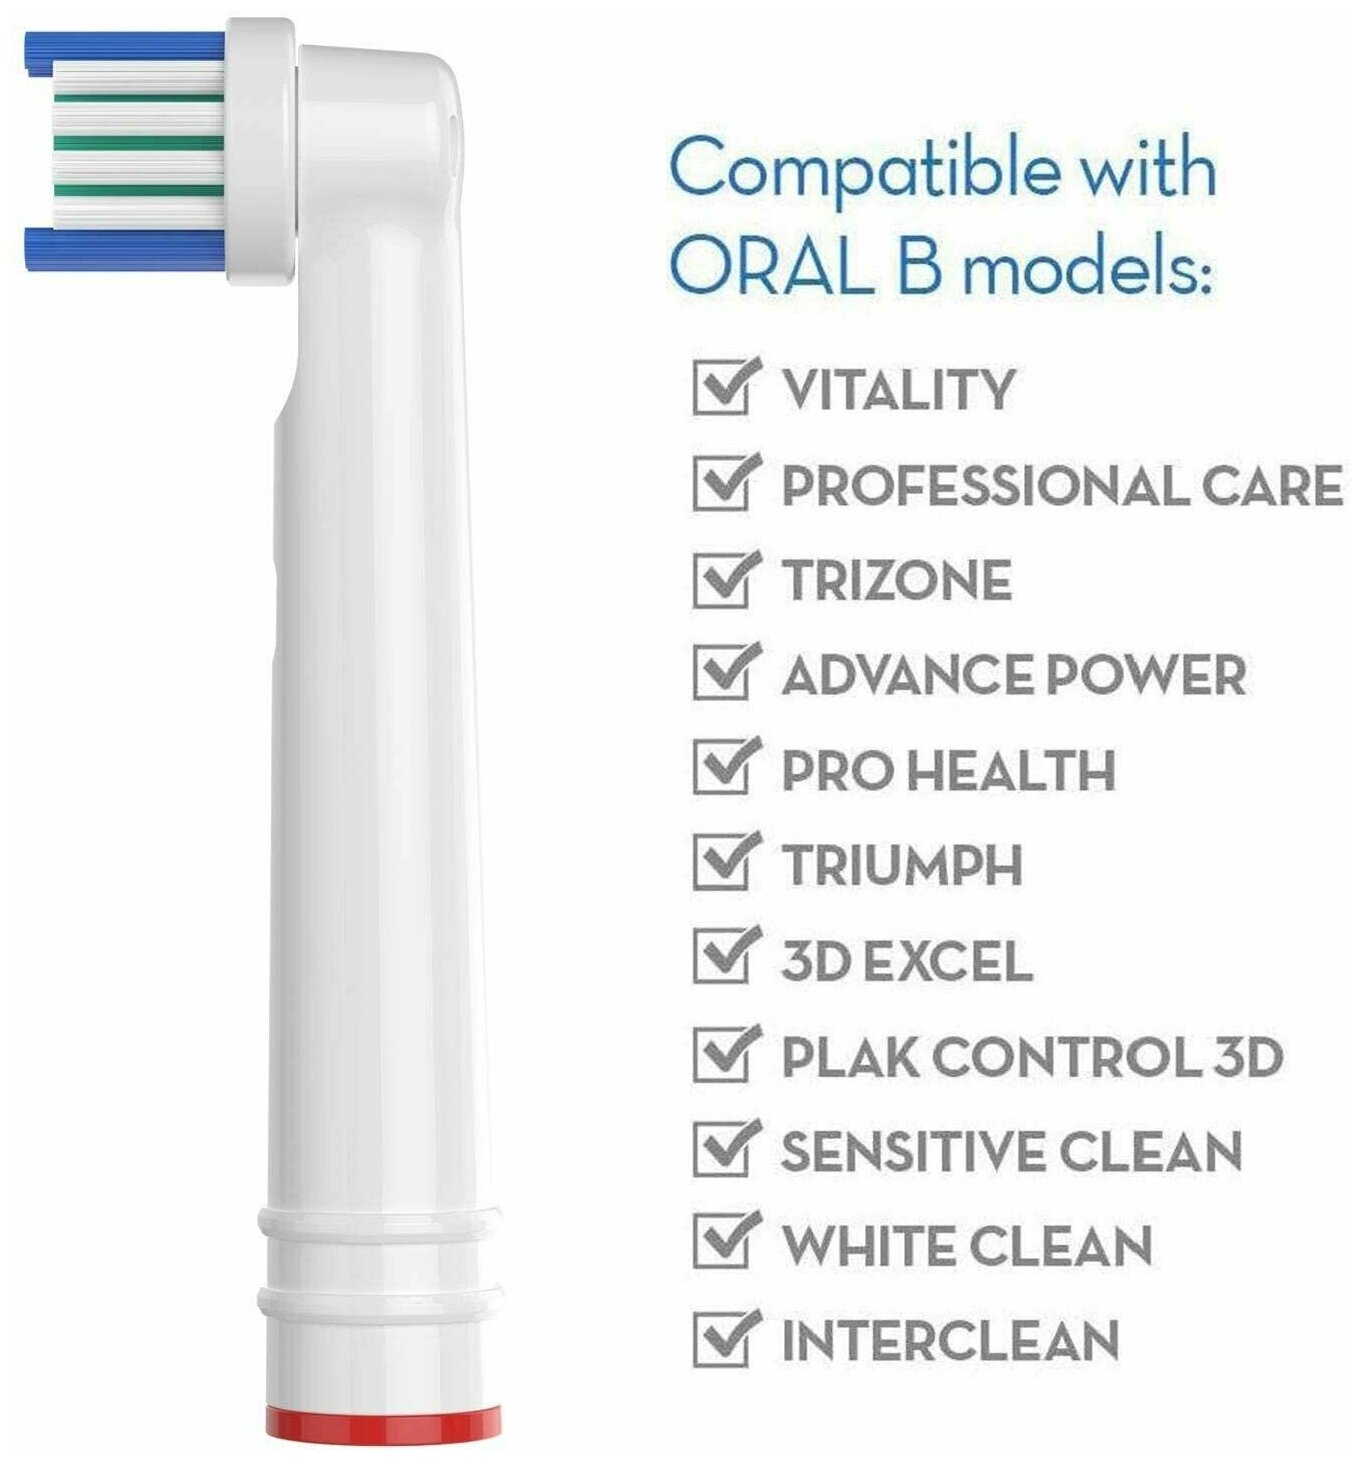 Набор насадок для Oral-B Braun электрической зубной щетки, моделей Advance Power, Pro Health, Triumph, 3D Excel, Vitality Precision Clean - фотография № 4